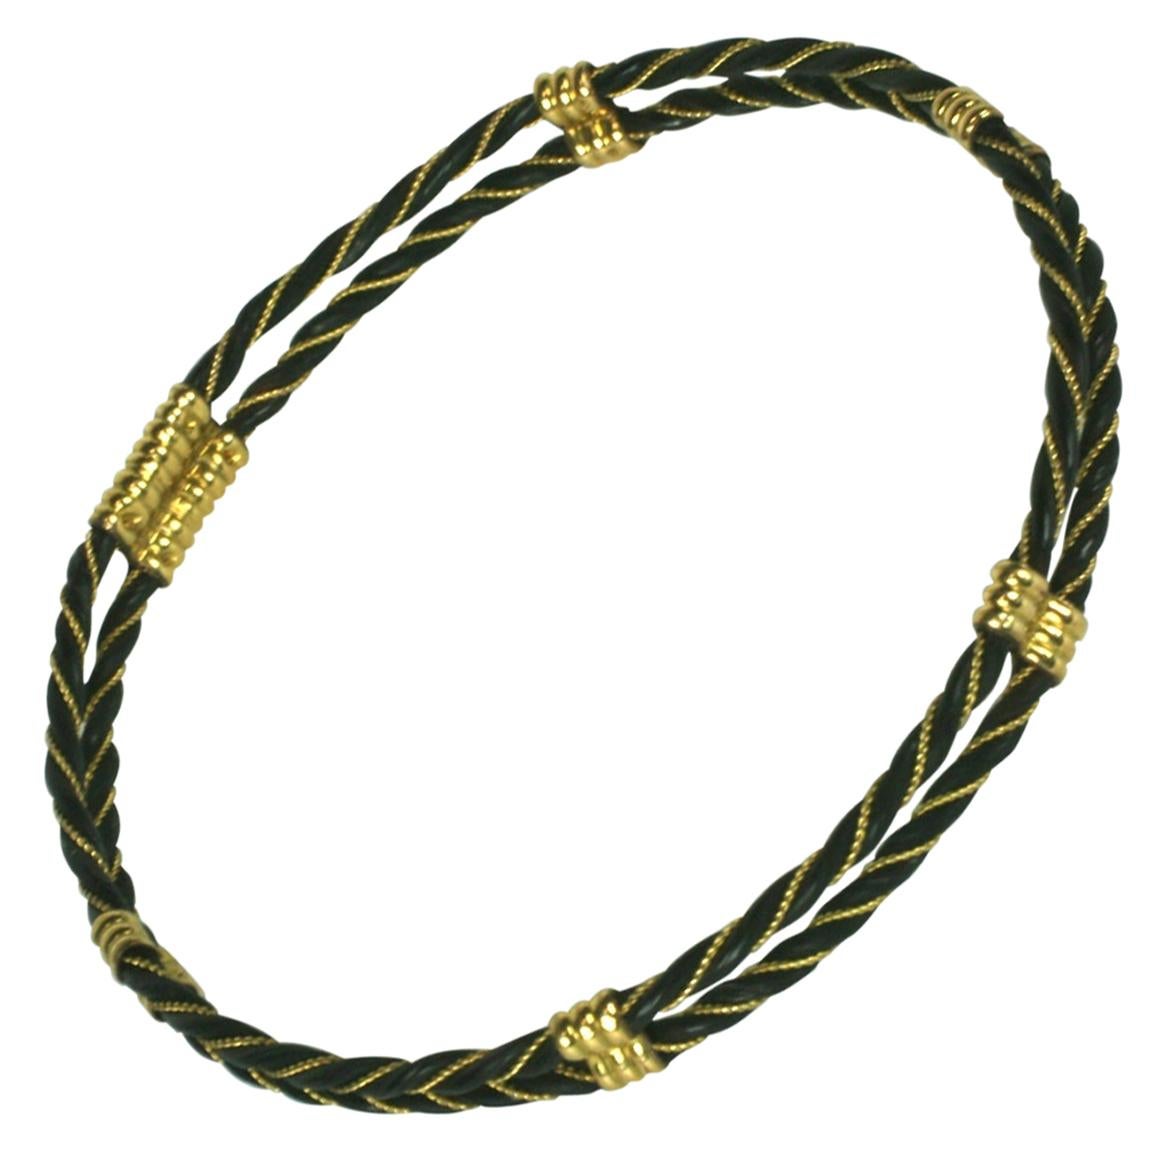 Elephant hair bracelet 4 knot 6 strand Sterling and Gold filled Safari Bracelet 